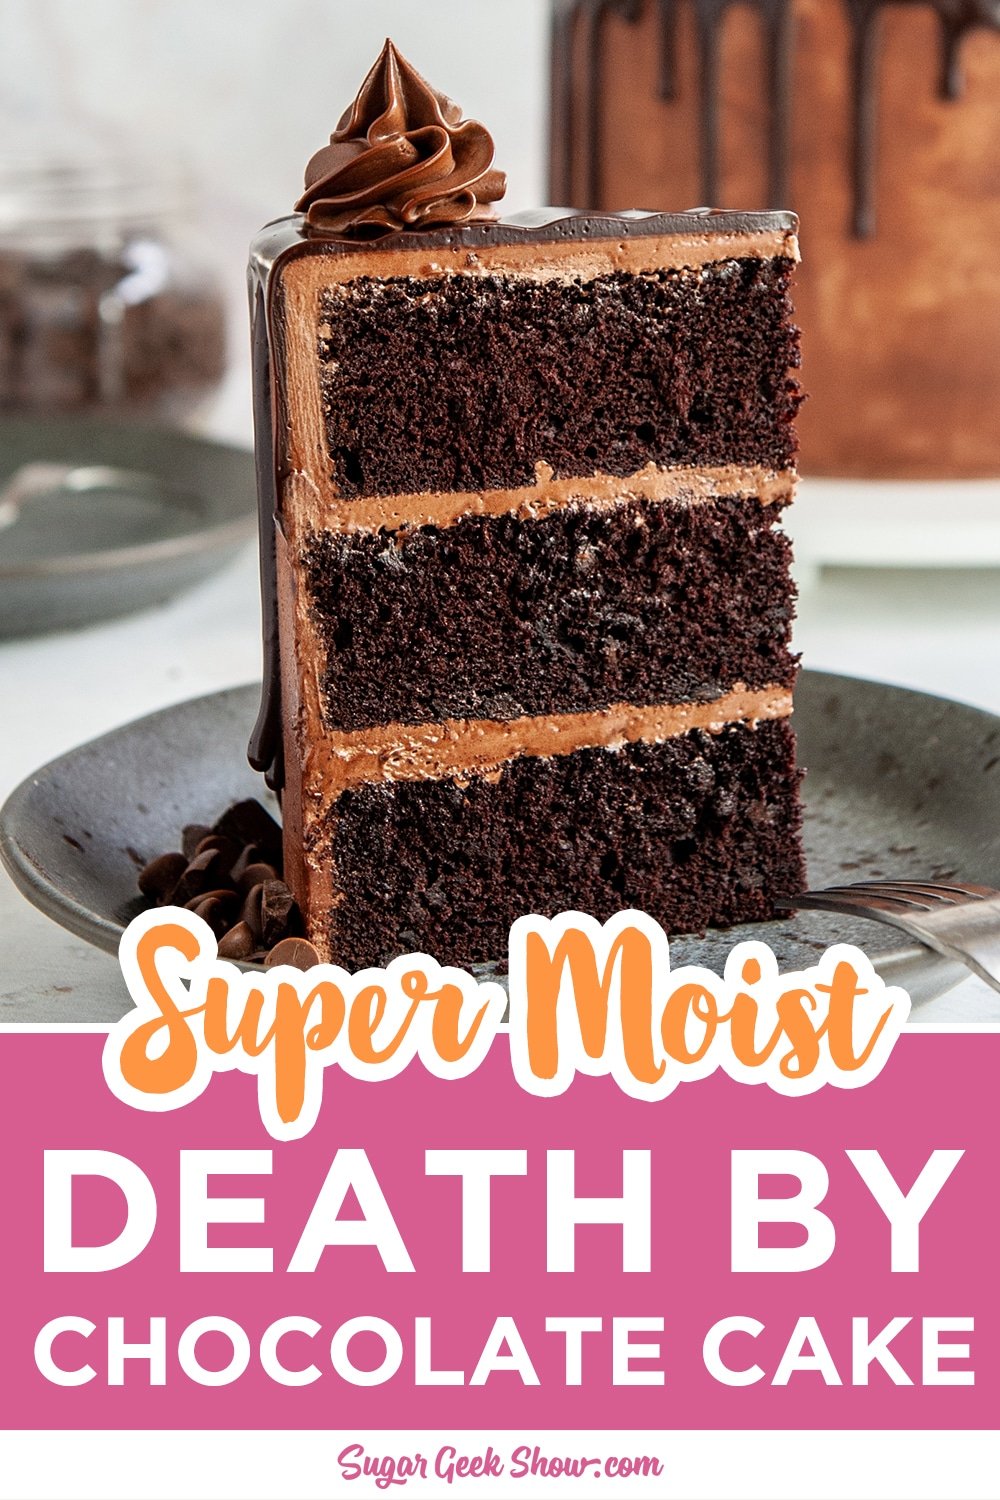 Deathy By Chocolate Cake Recipe + Video Tutorial | Sugar Geek Show